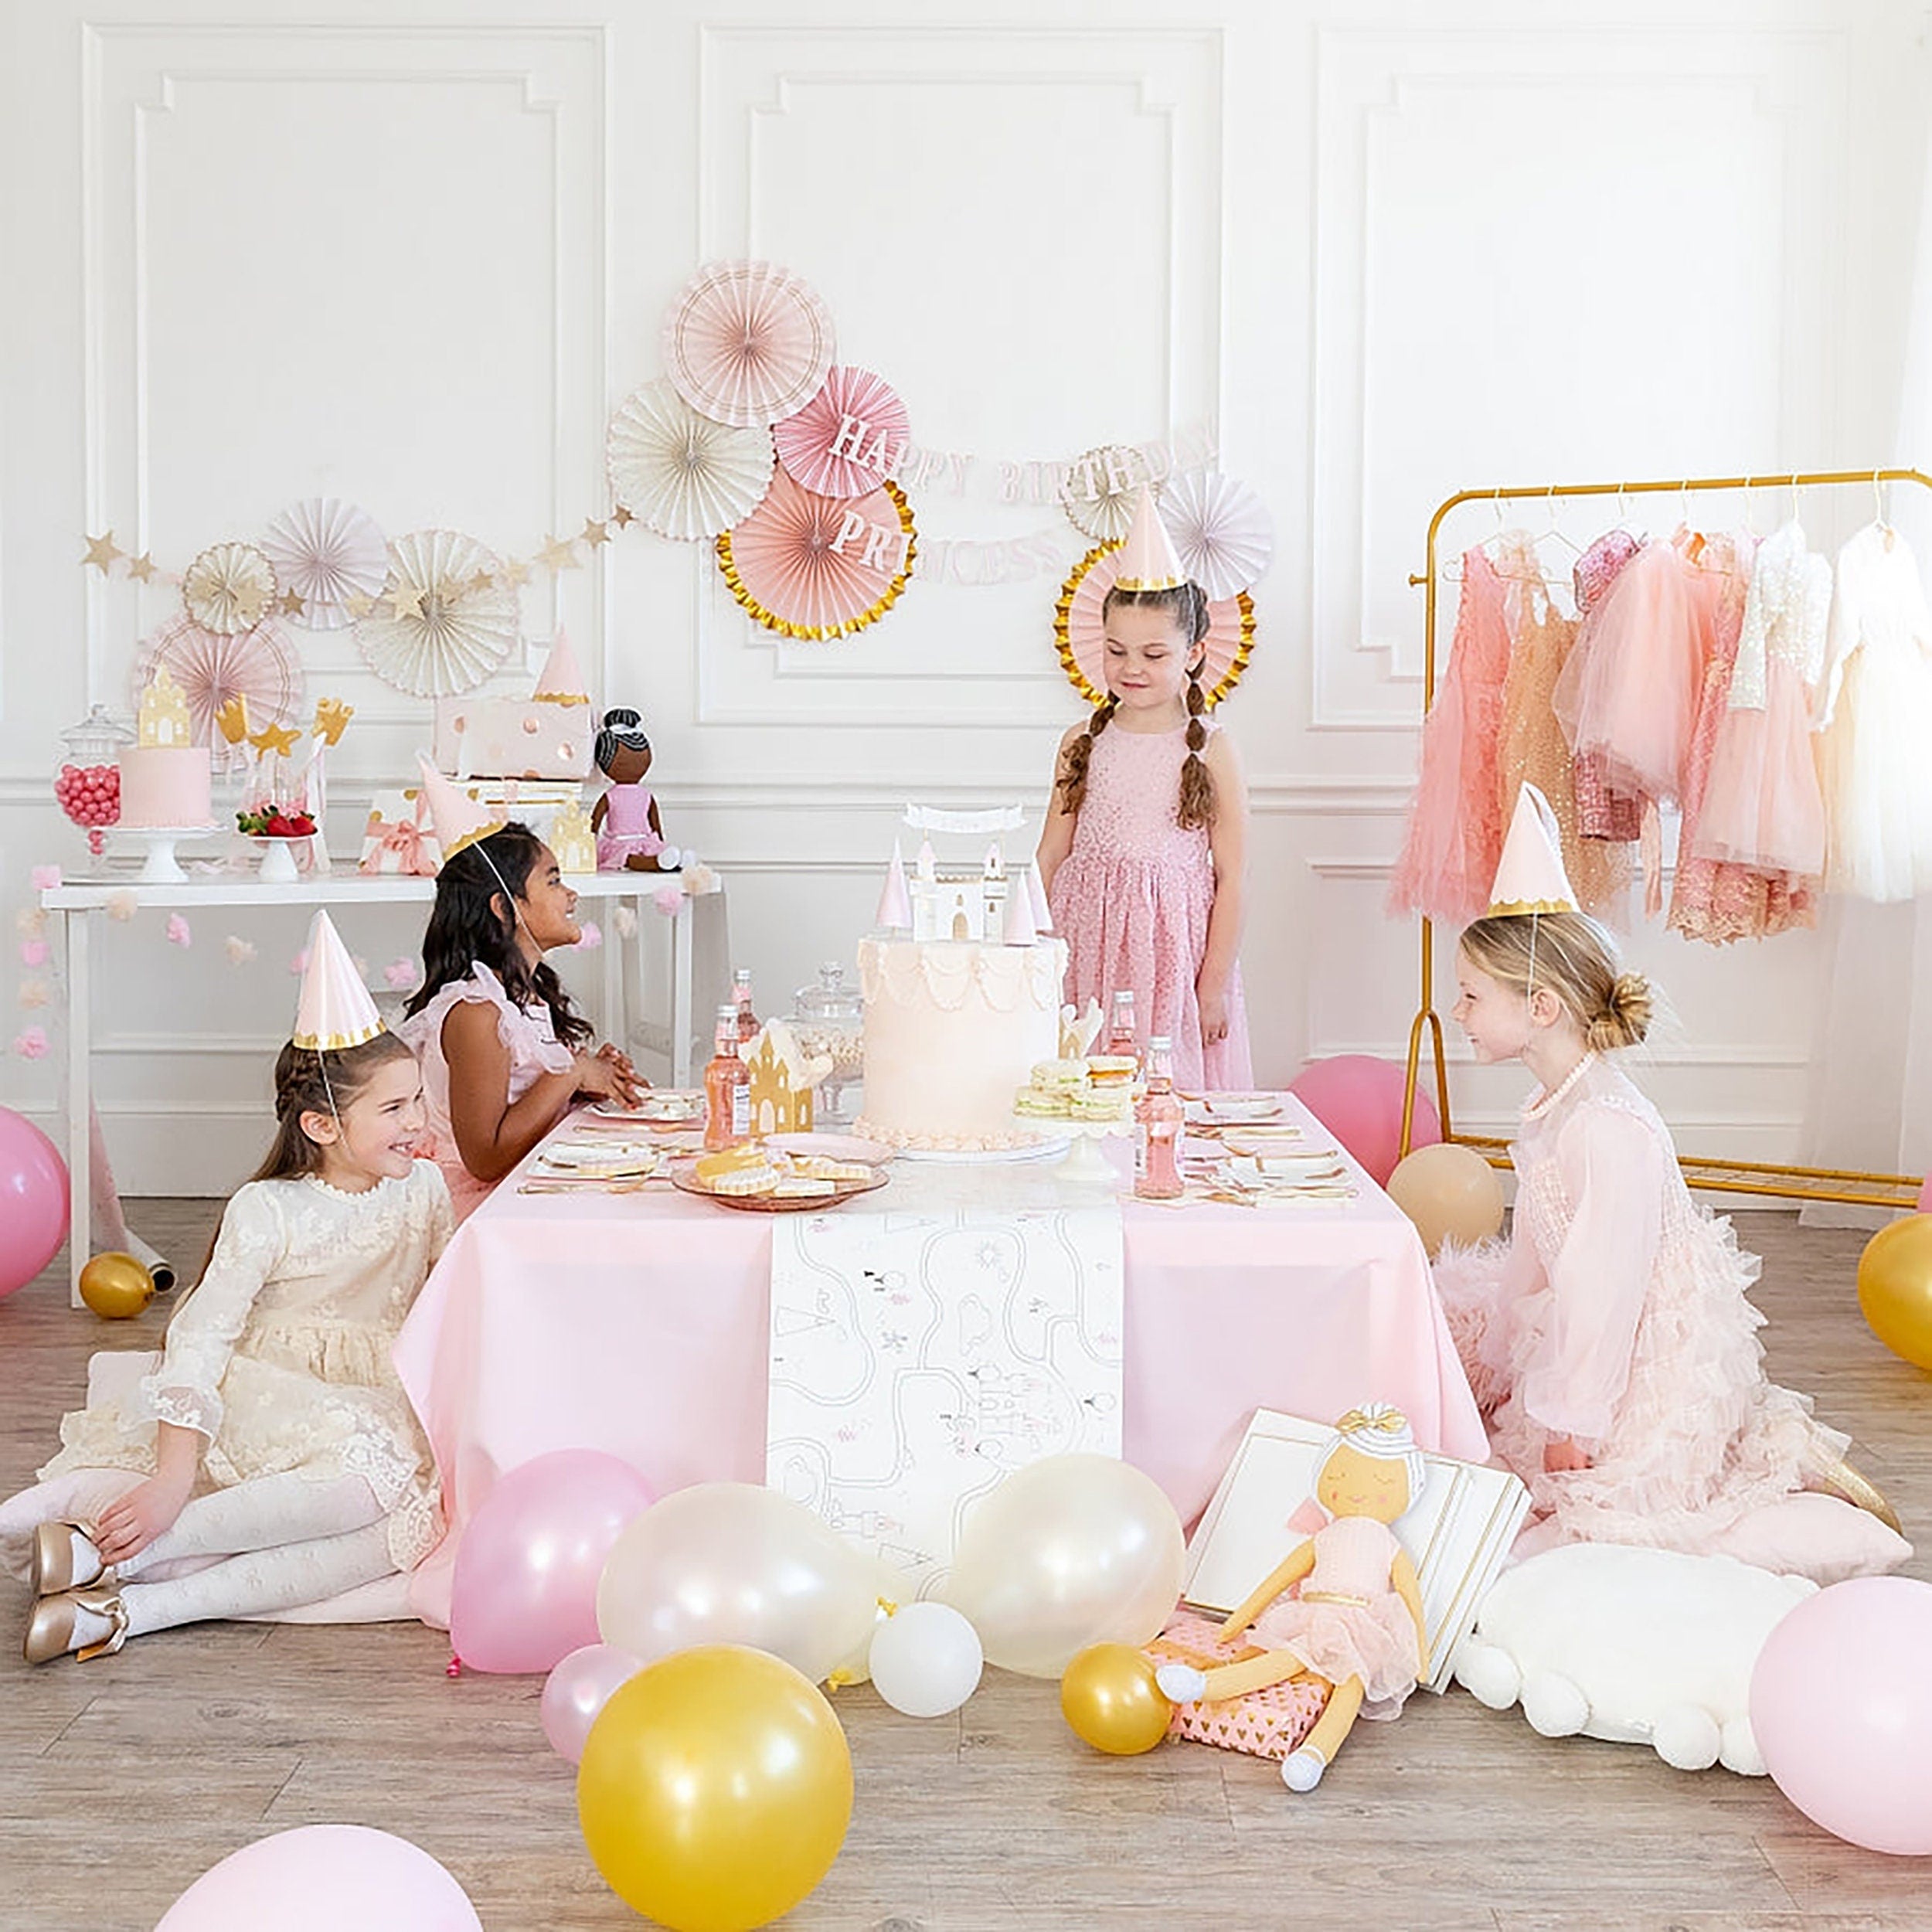 Castle Napkins | Princess Birthday Party - Princess Party Supplies - Princess Tea Party - Princess Baby Shower - Decorative Paper Napkins